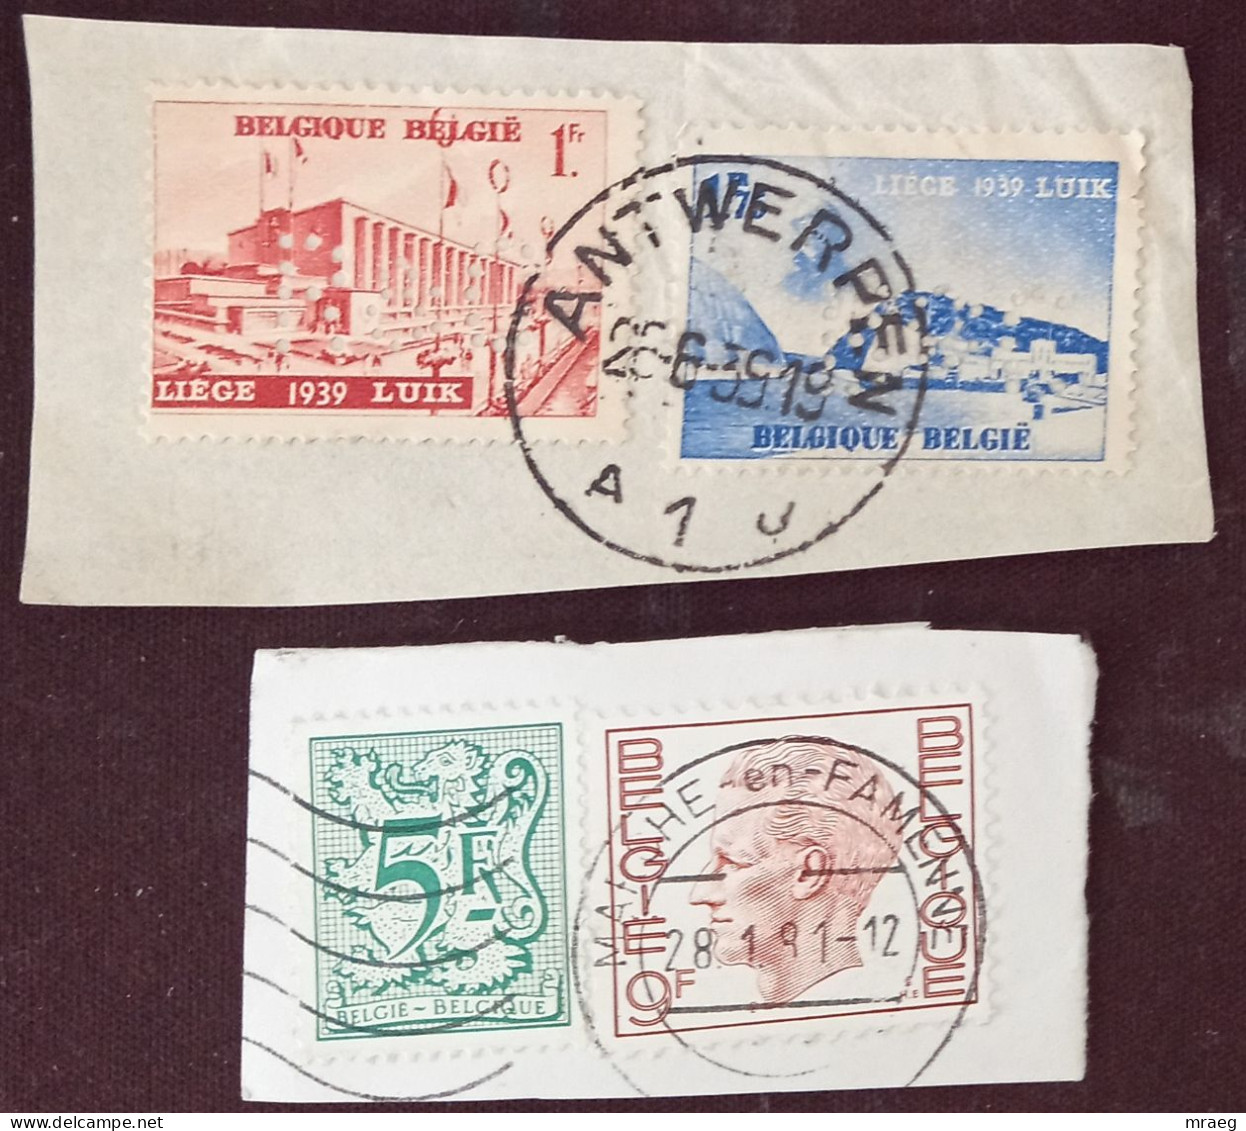 BELGIUM  1939 & 1981 TWO FRAGMENTS   F VF - Briefe U. Dokumente